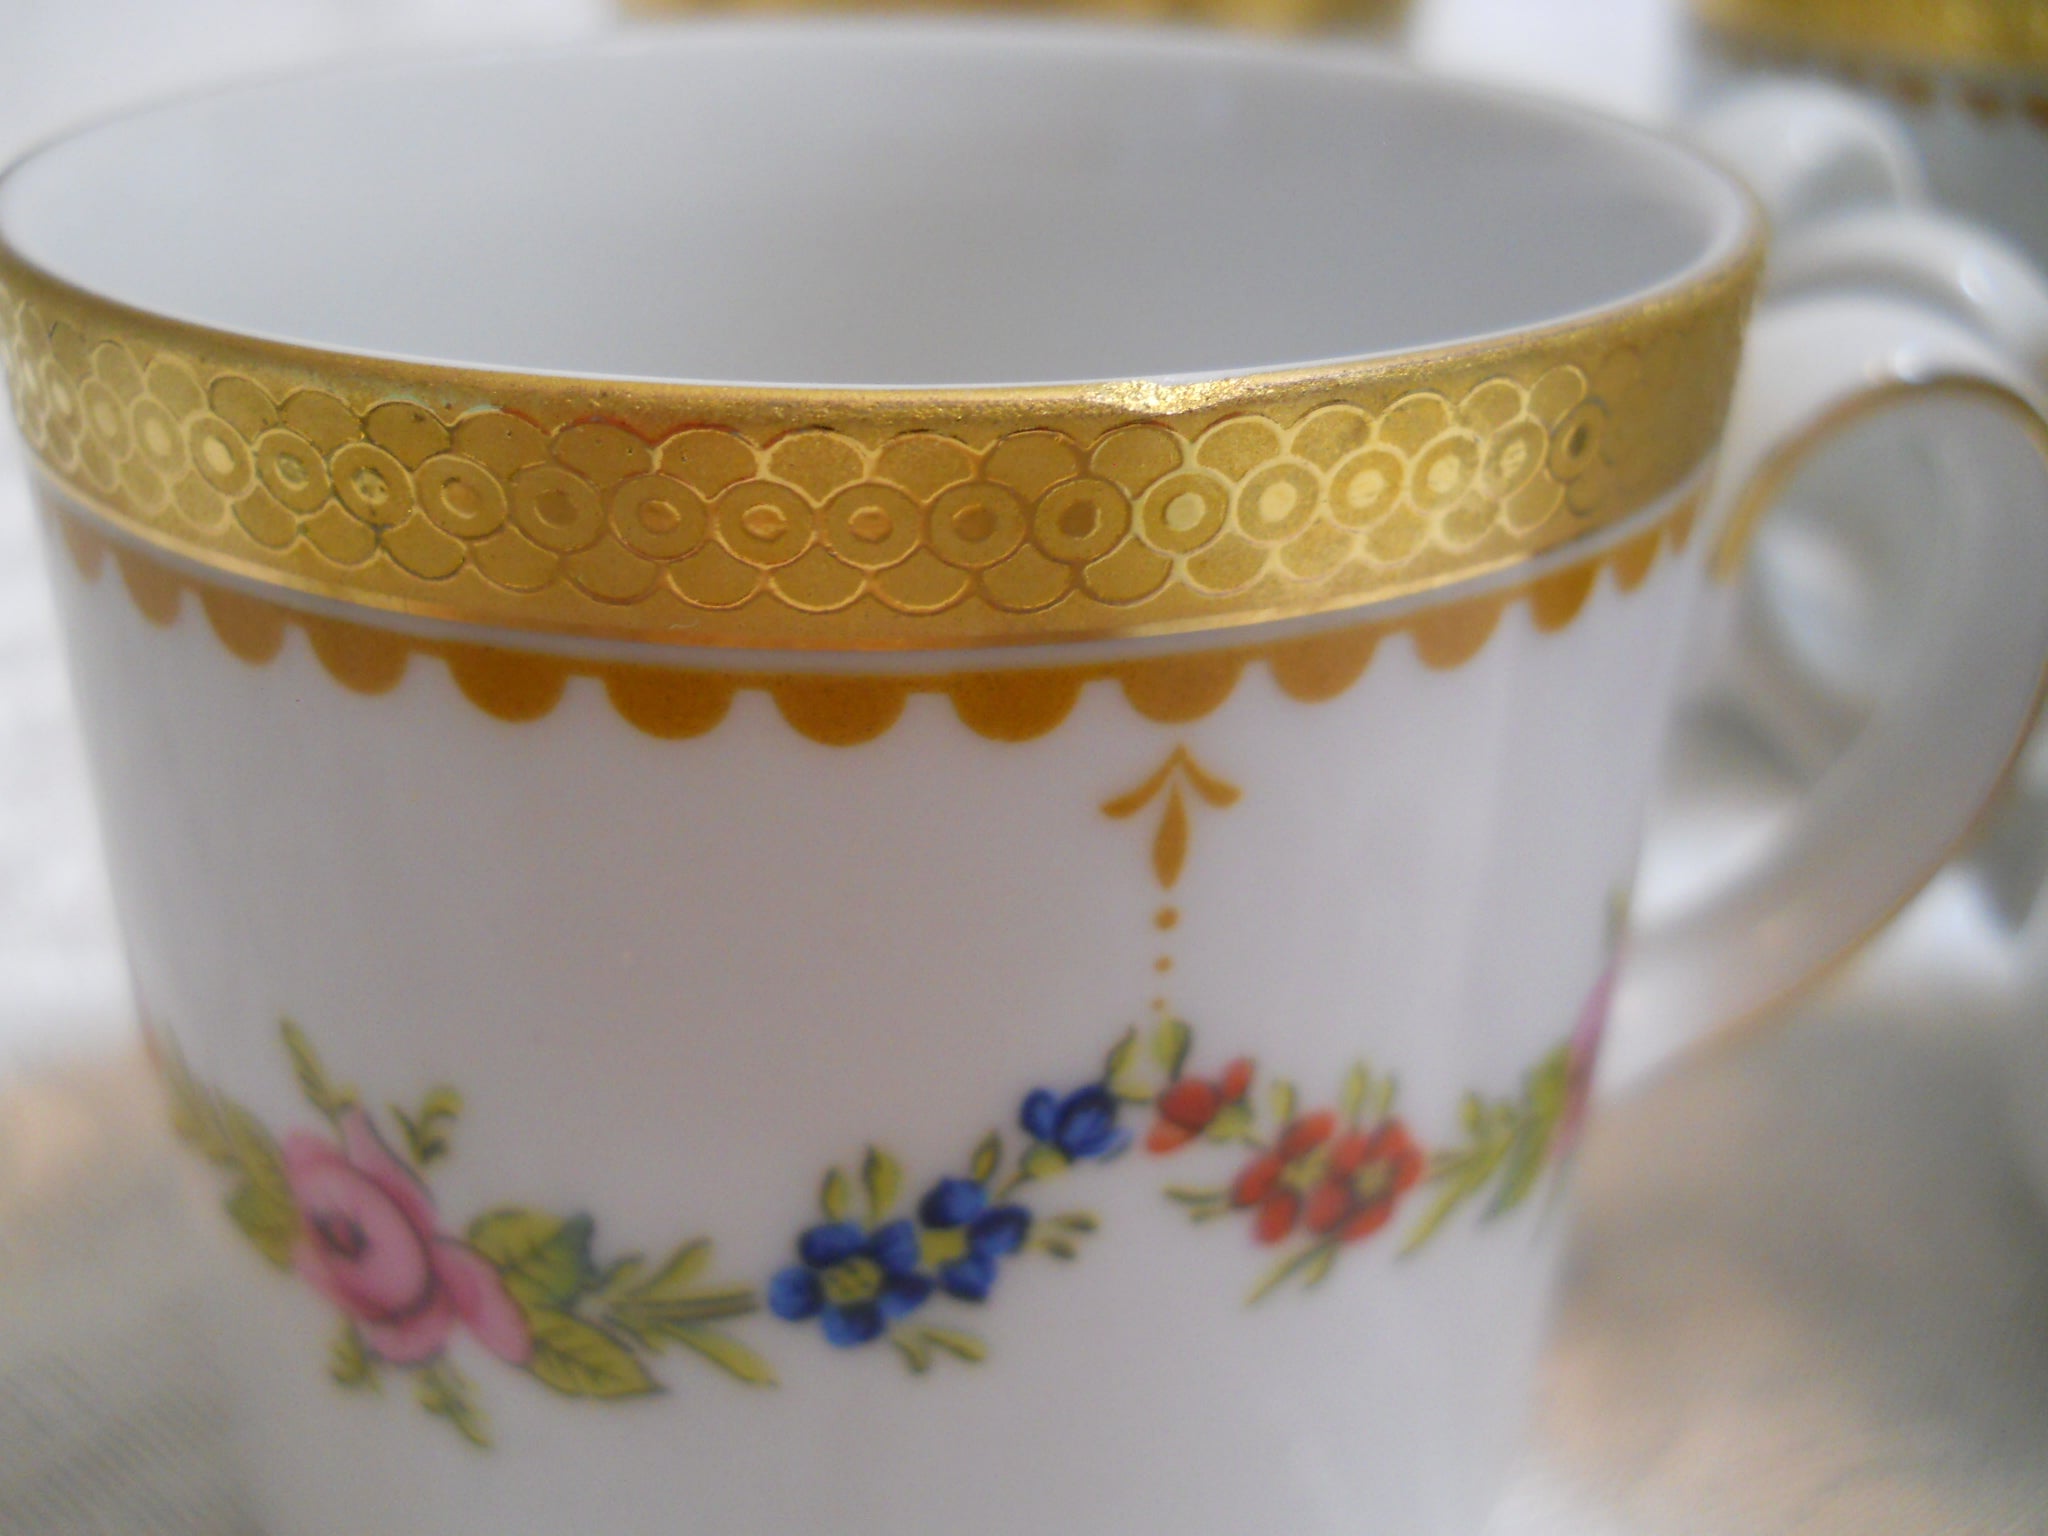 porcelain demitasse espresso cup — Set Fire To It